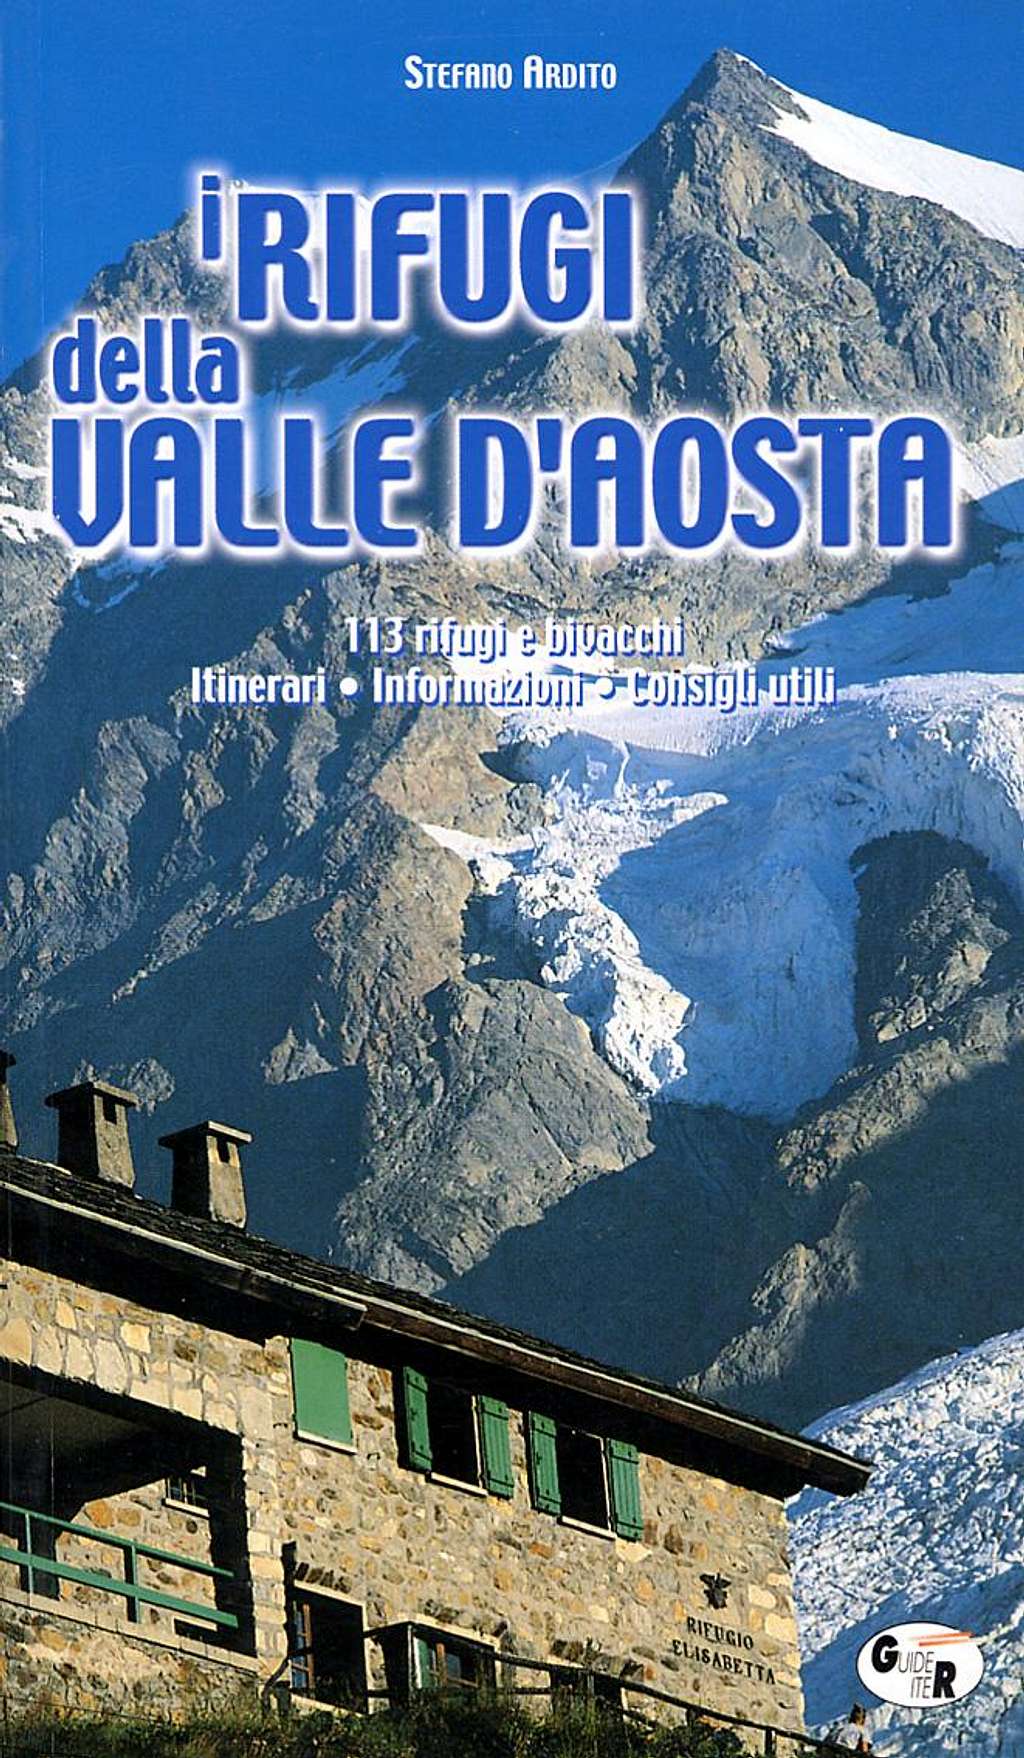 Rifugi della Valle d'Aosta